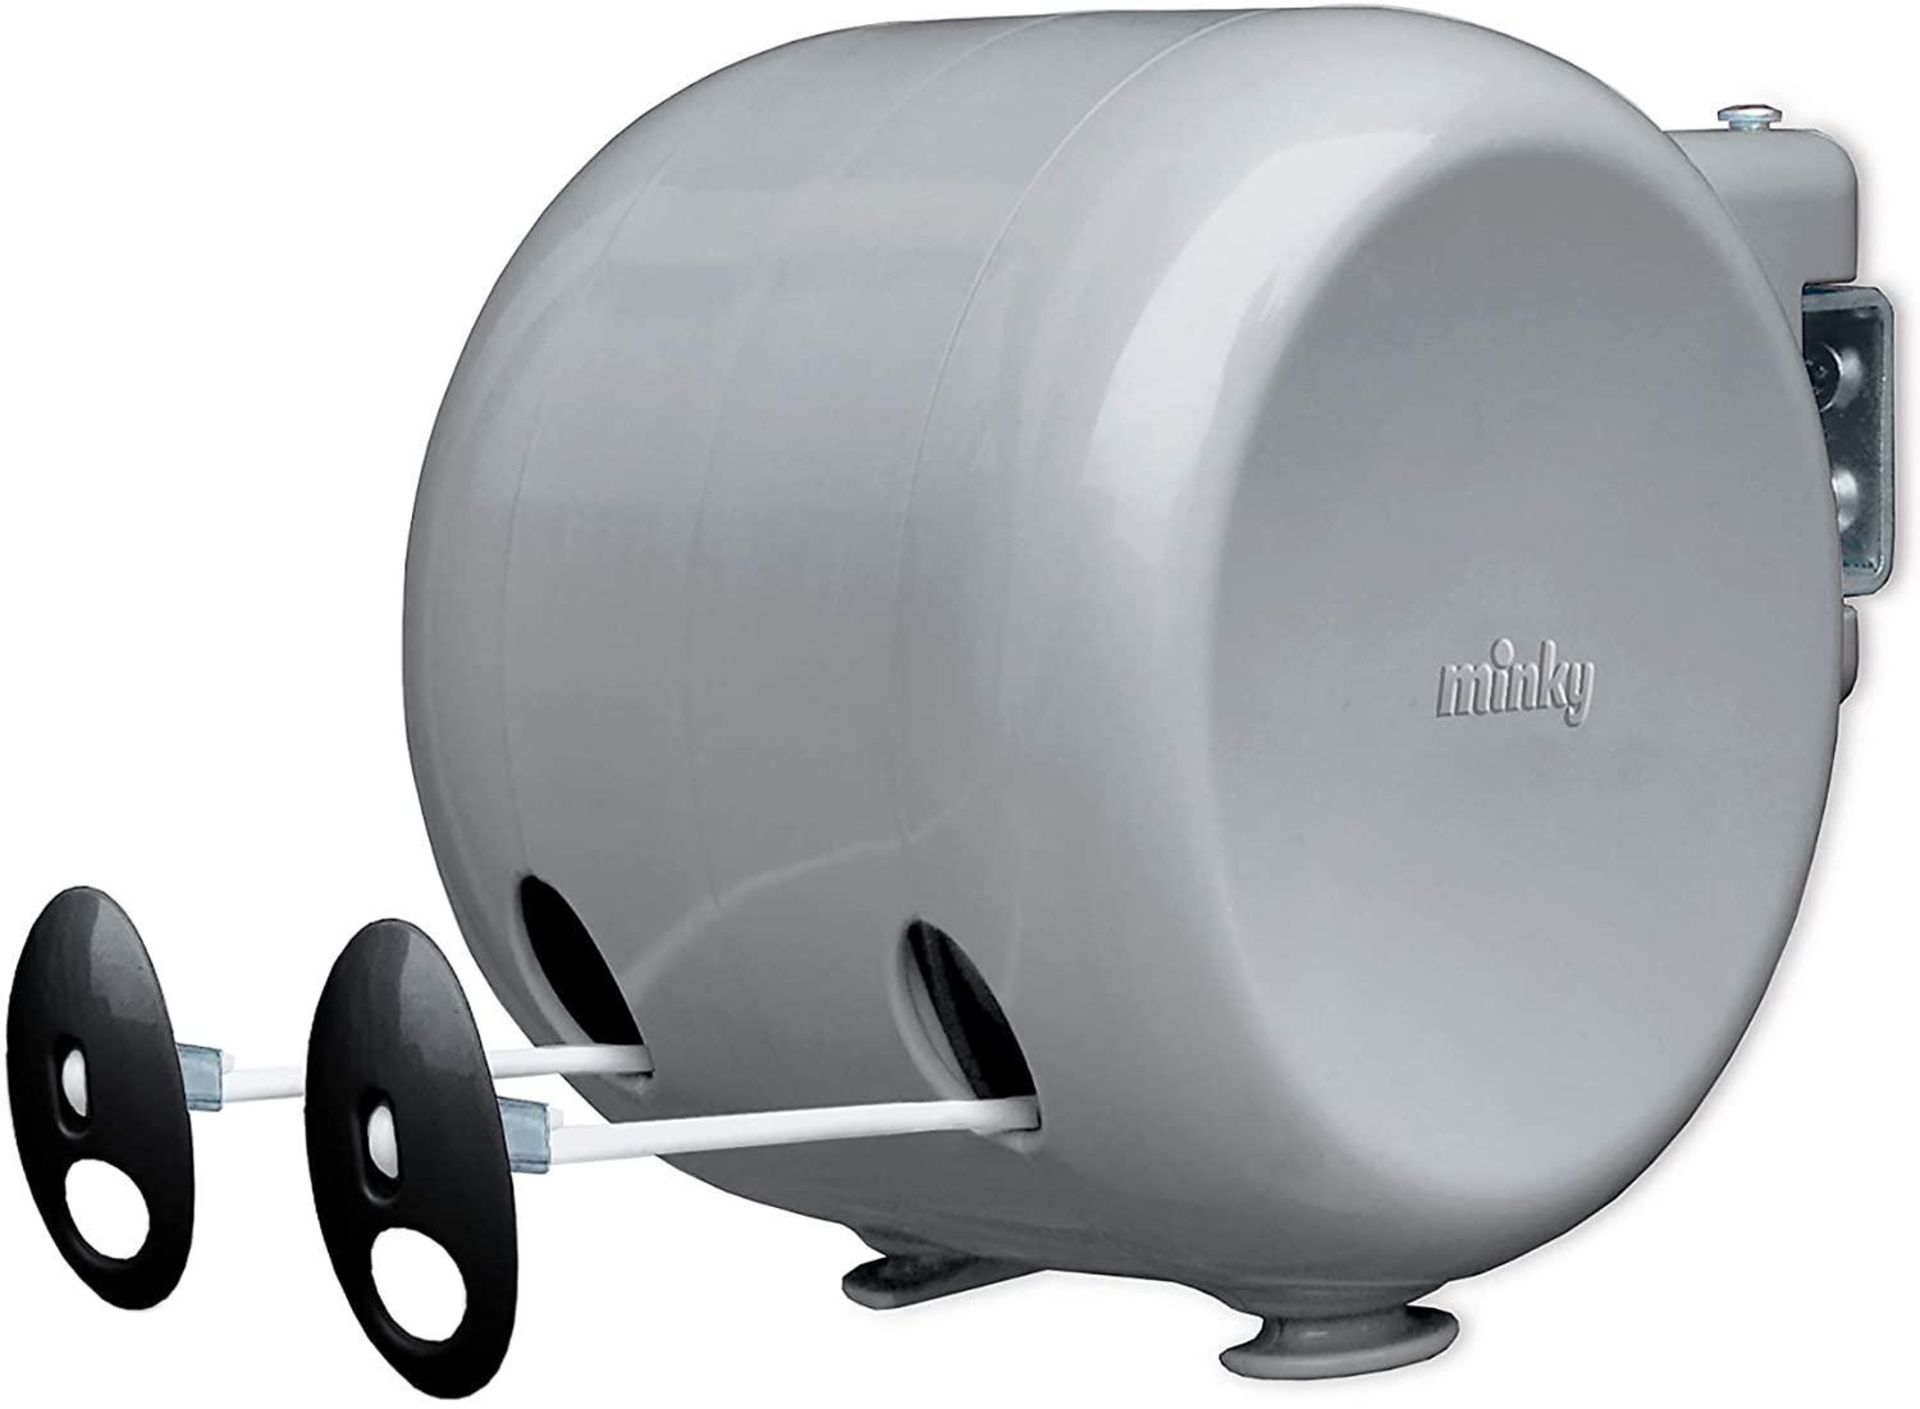 Minky Retractable Duo Reel Washing Line, Grey £13.99 RRP